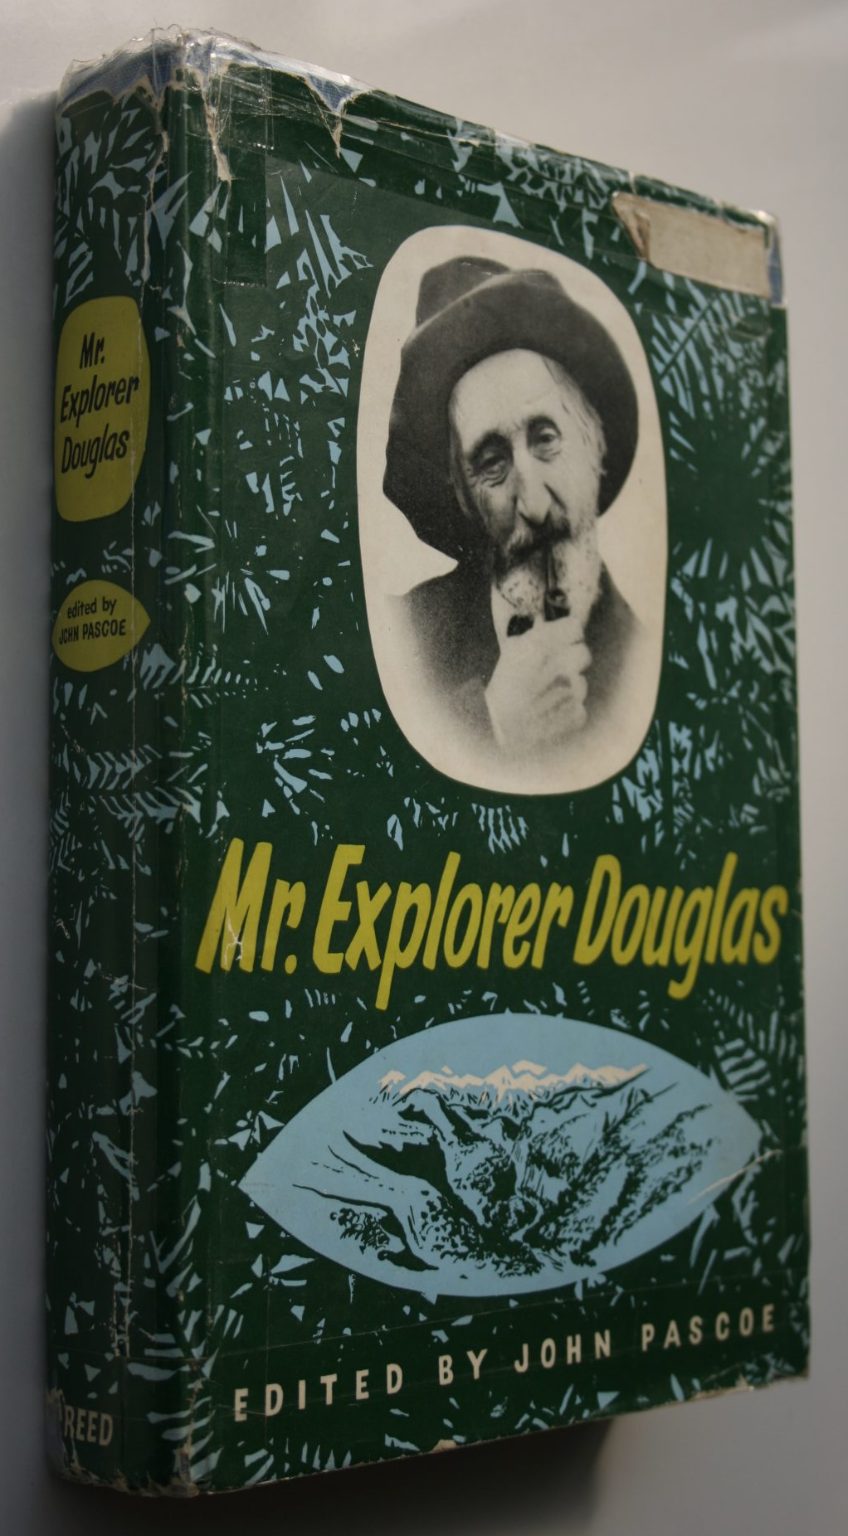 Mr. Explorer Douglas (1957 First edition). By John Pascoe